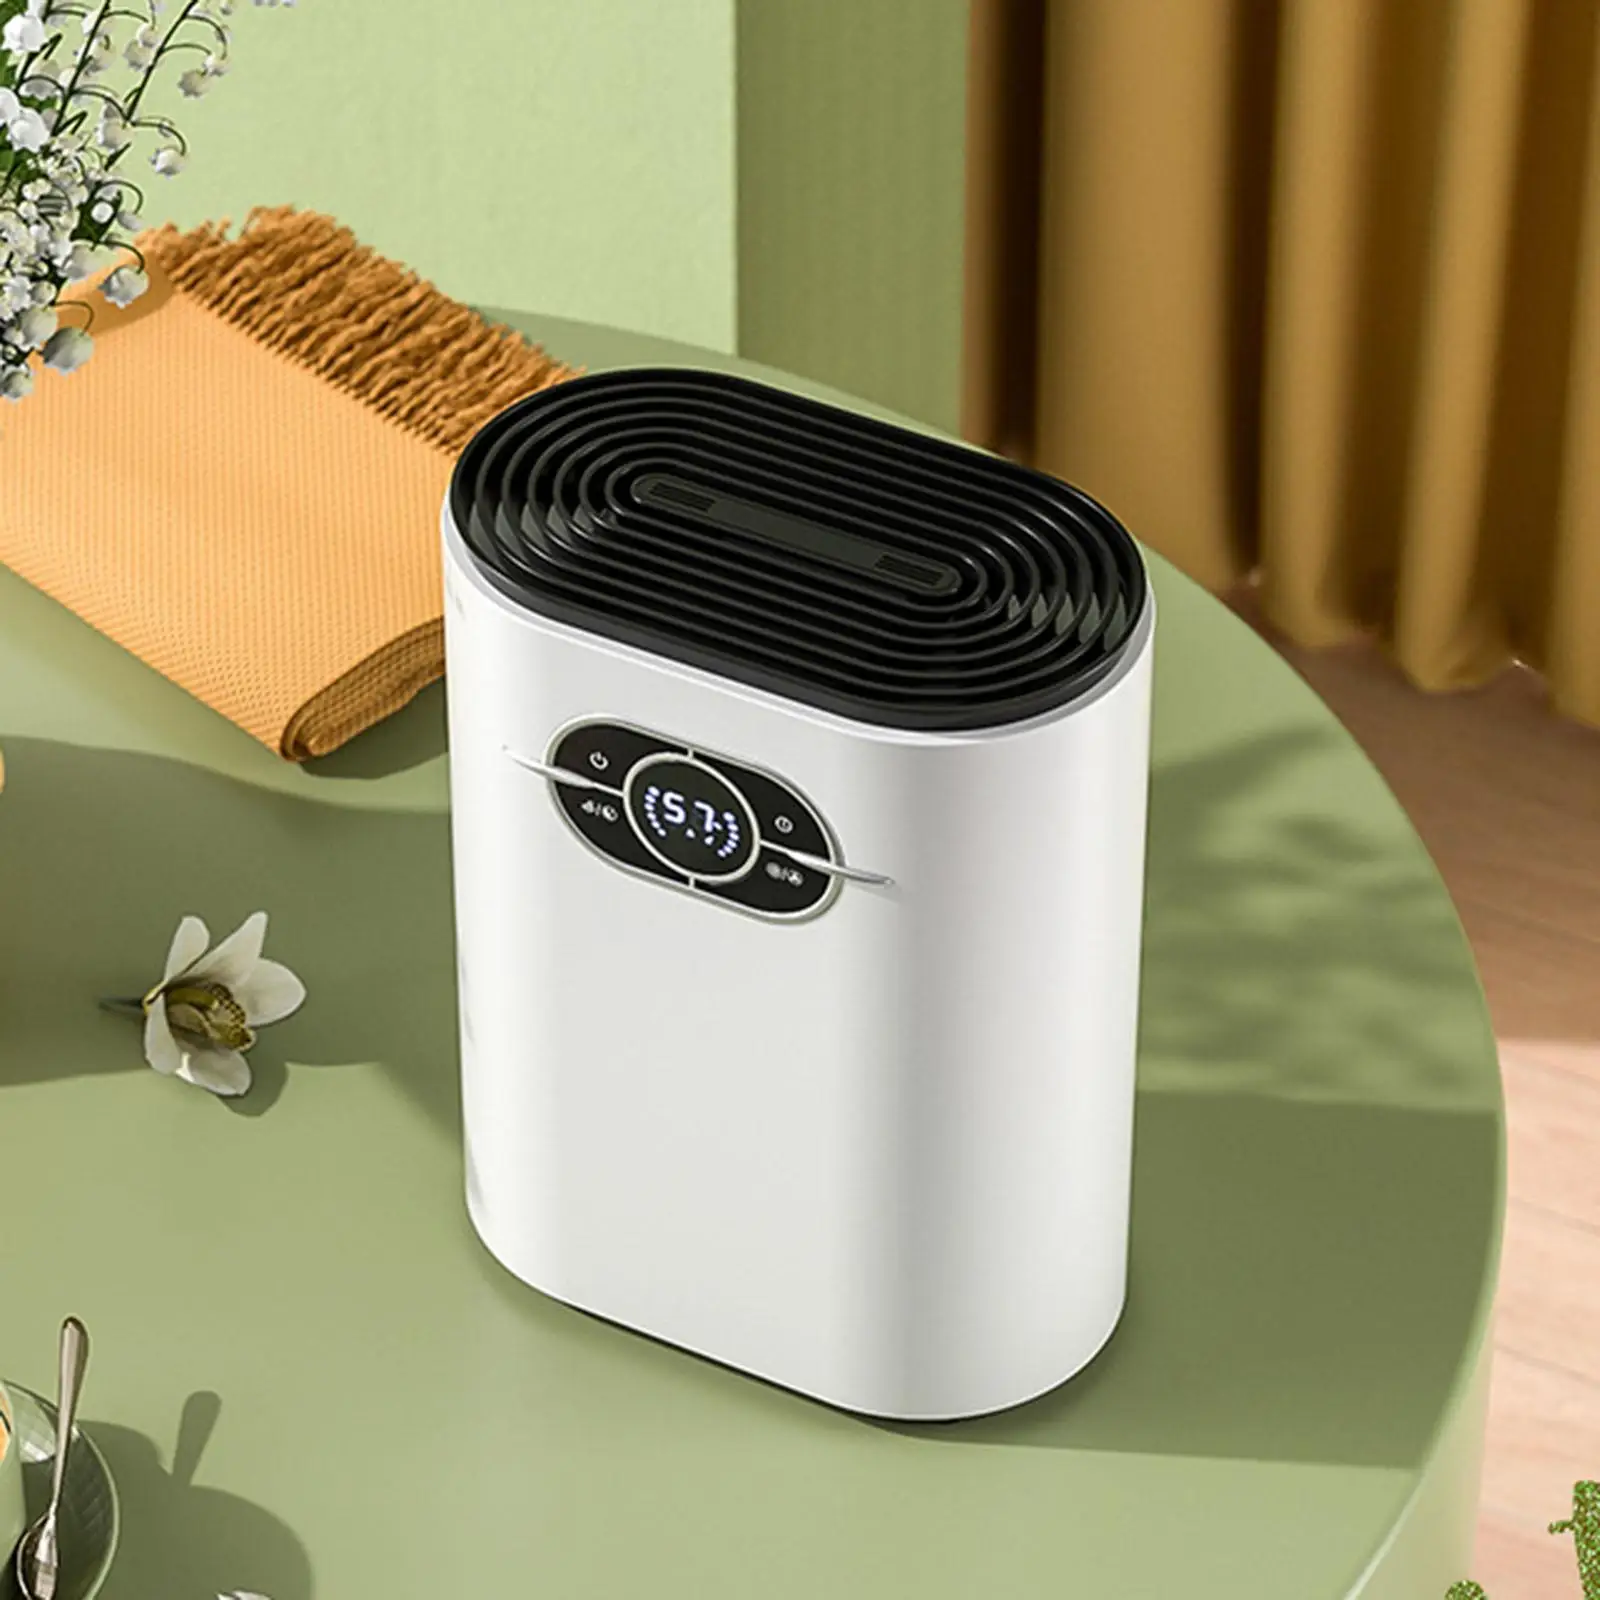 Portable Dehumidifier 1200ml Dehumidification Dryer for Garage Camper Wardrobe Room